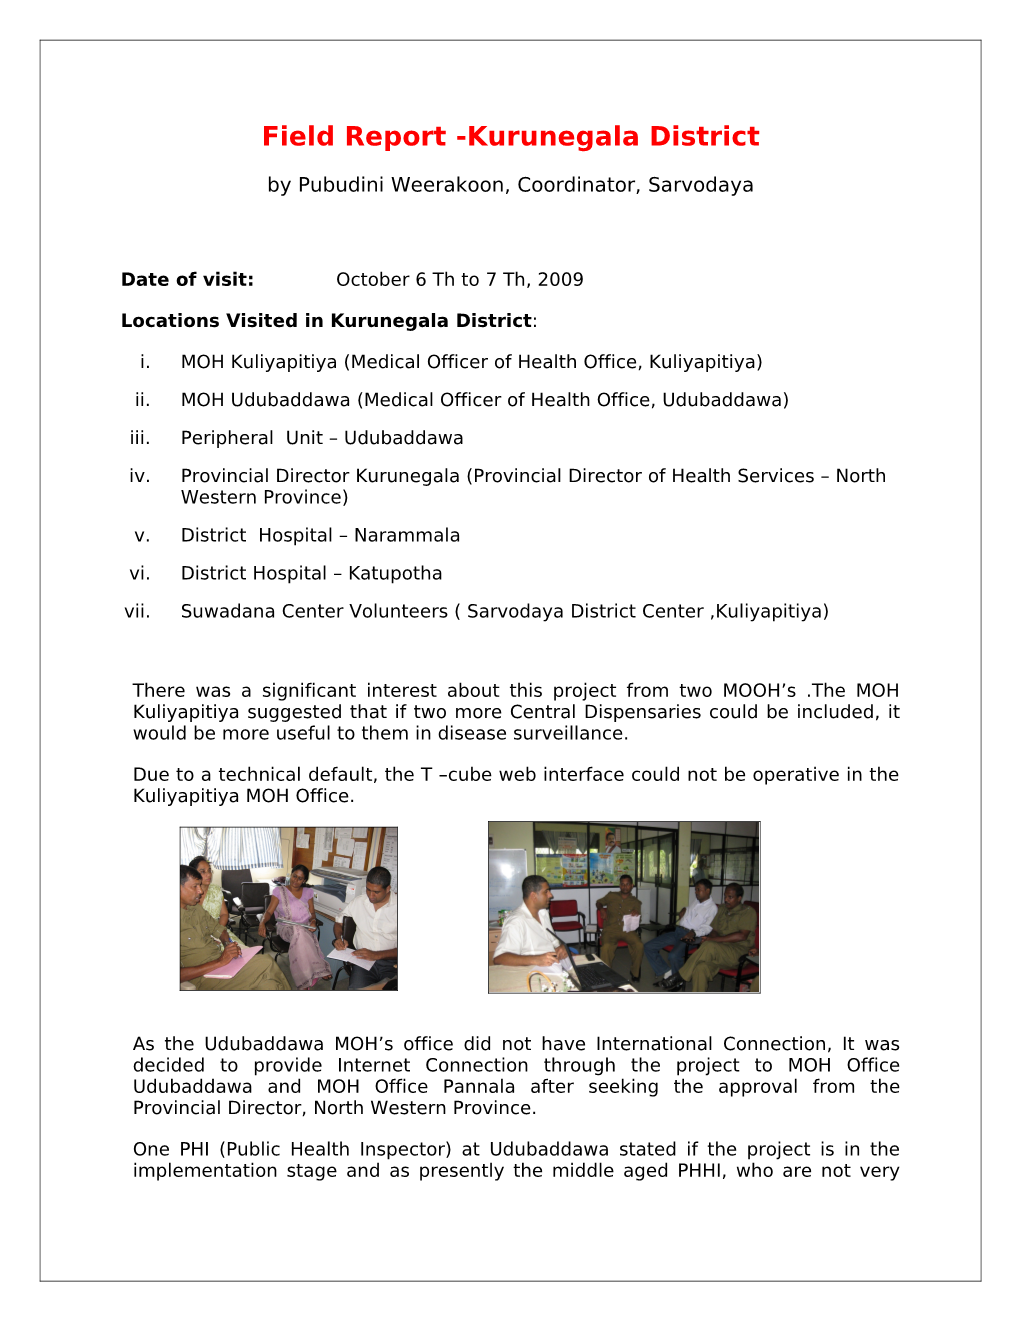 Kurunegala District Field Report